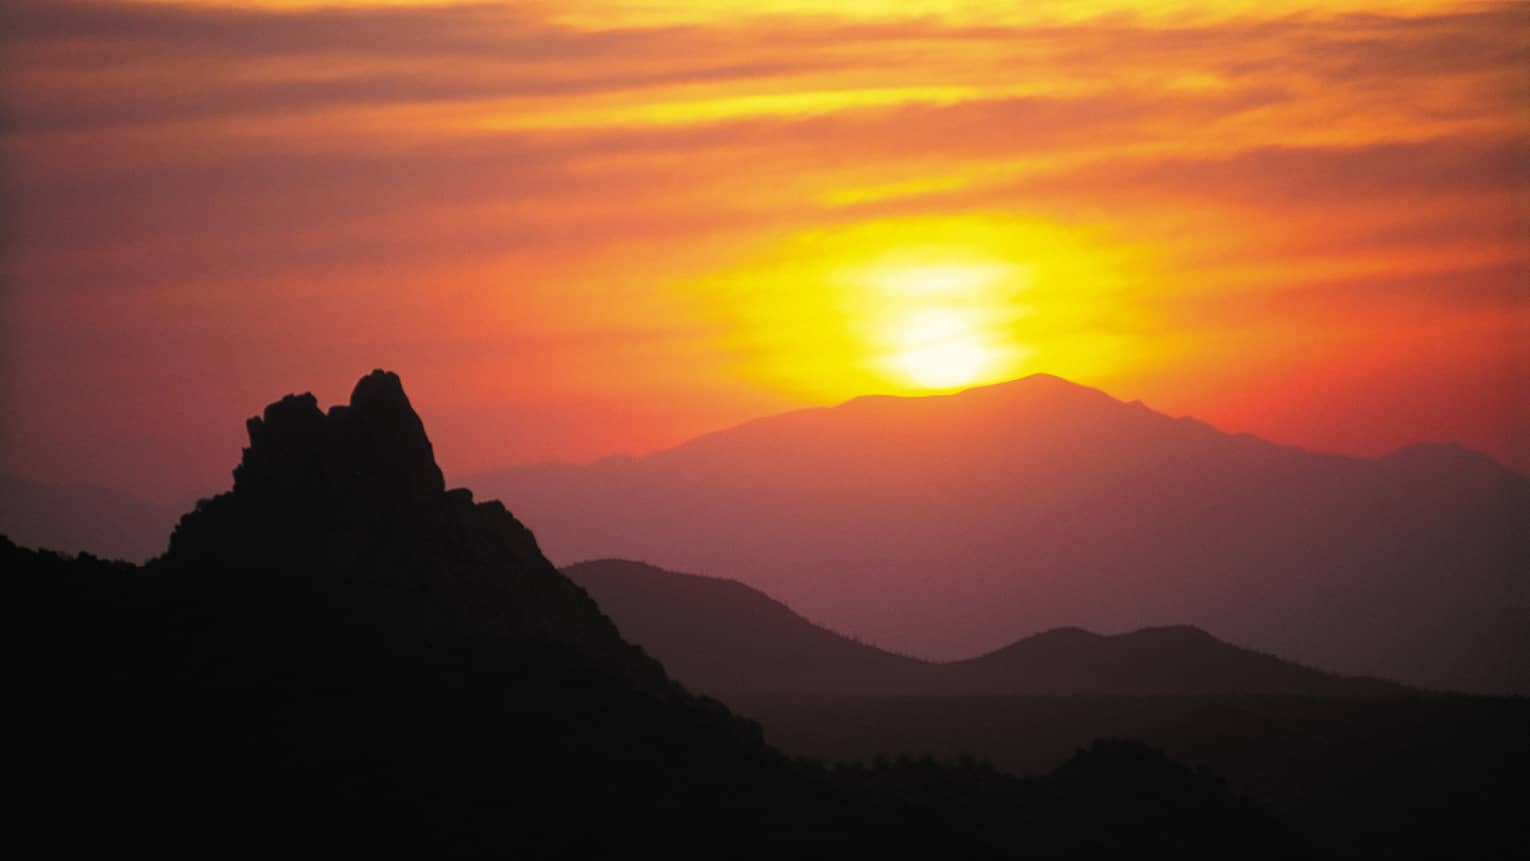 Silhouette of Pinnacle Peak mountain in front of orange sunset